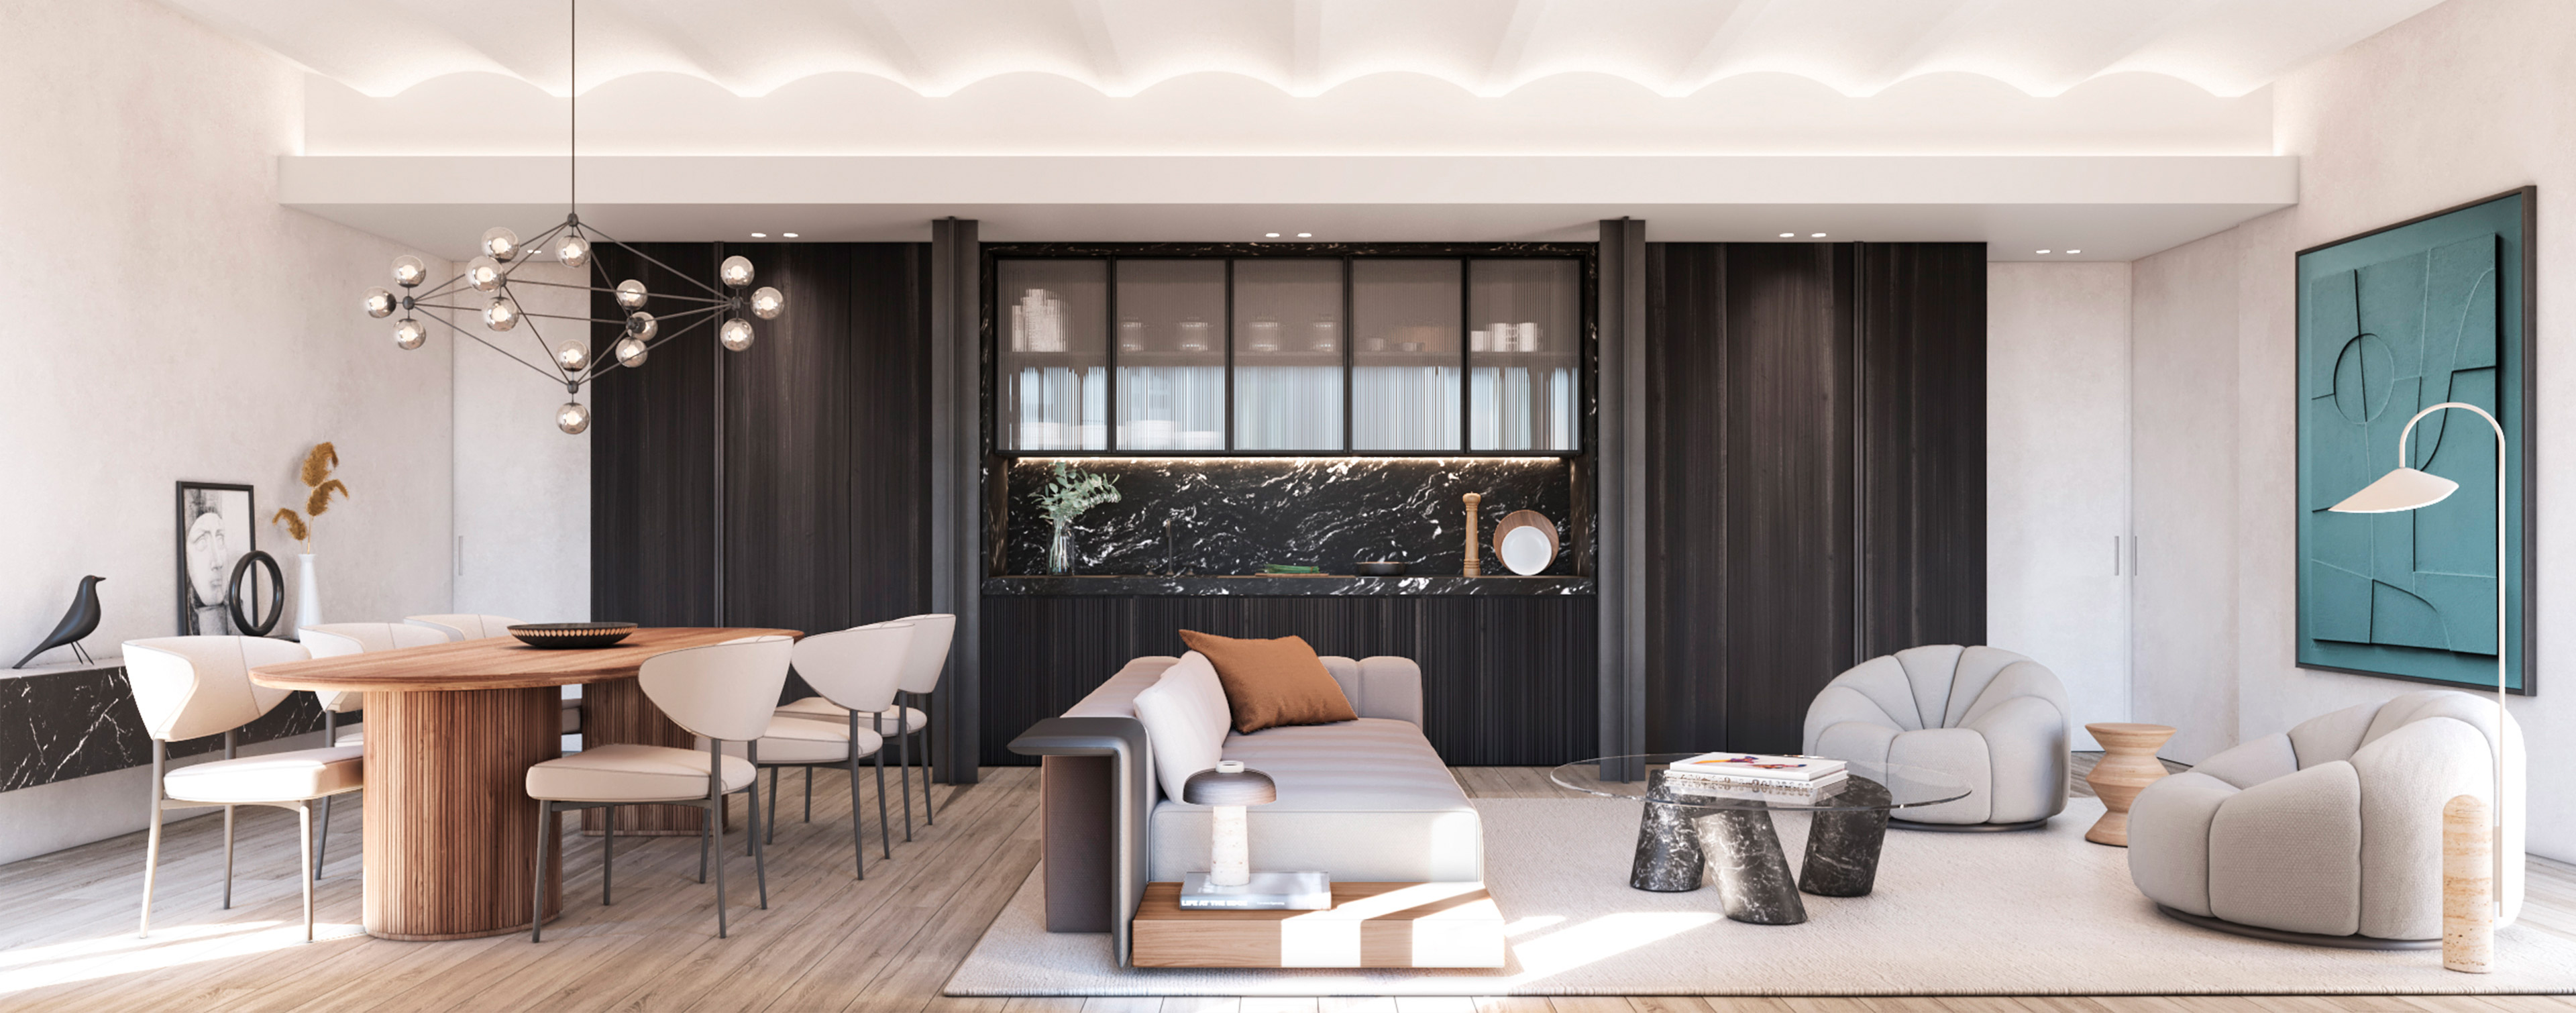 luv studio luxury architects barcelona rambla catalunya apartment IMG 01 - Rambla Catalunya Apartment 